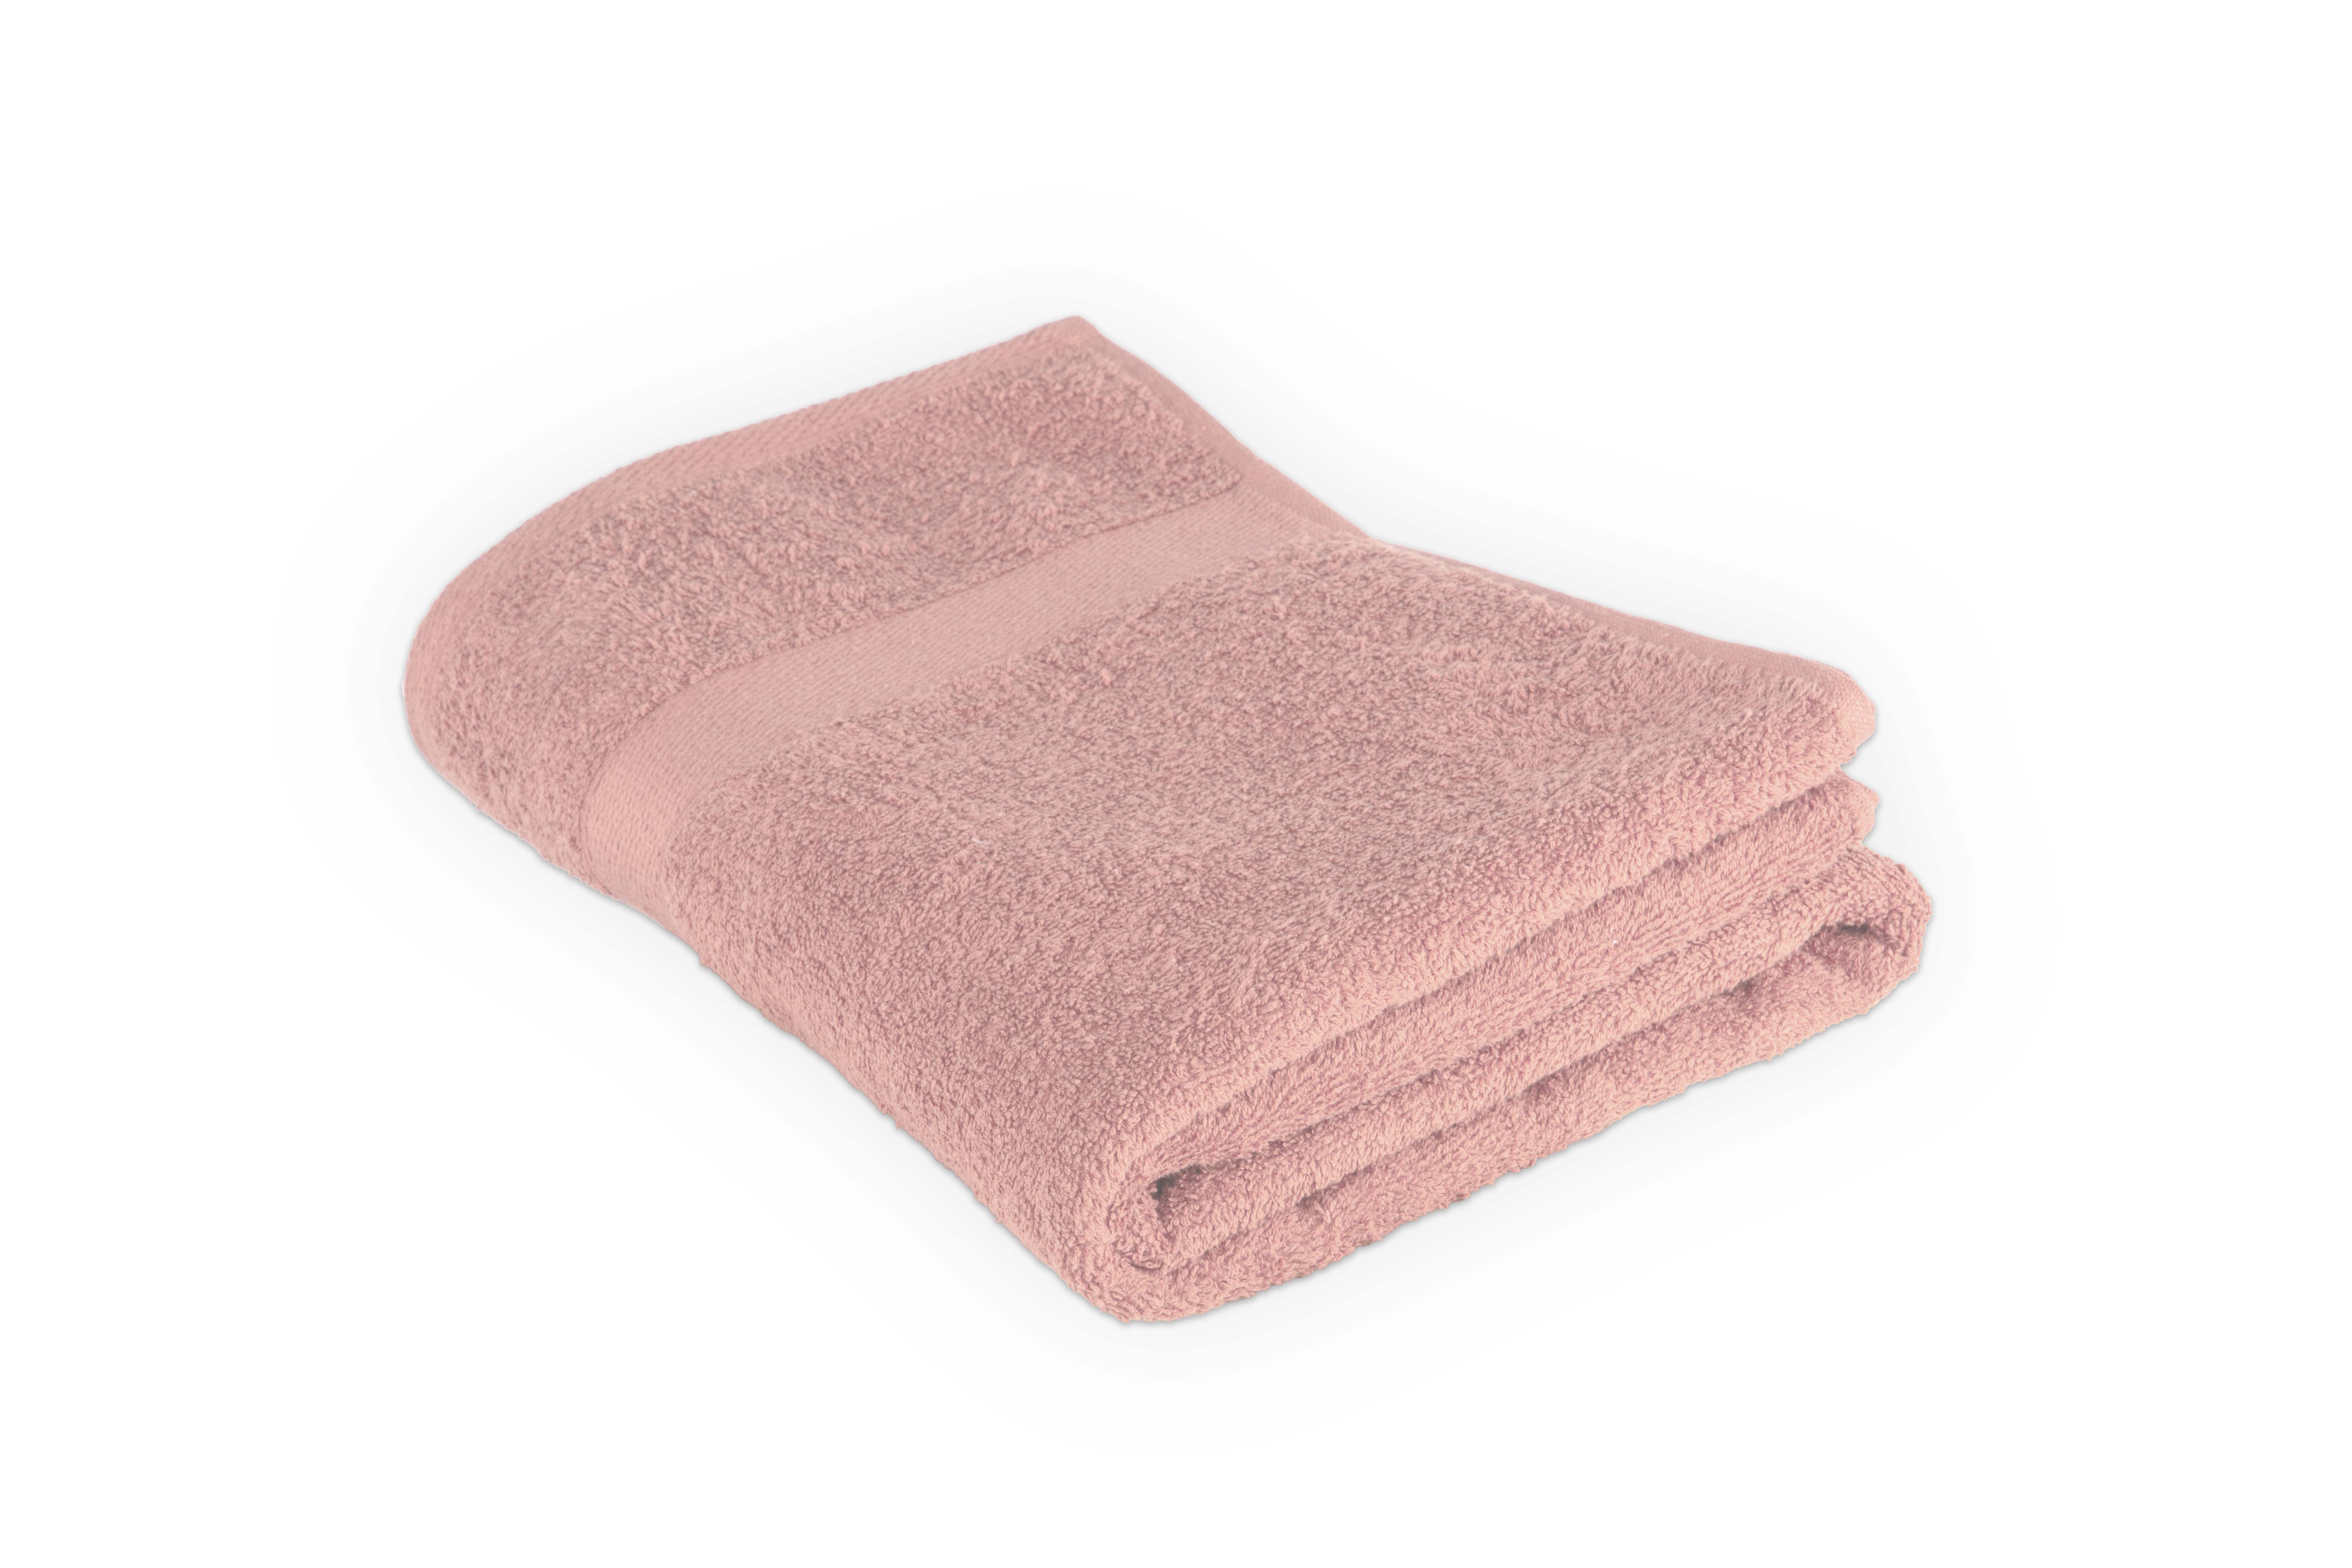 Shower towel 100x150cm, pink